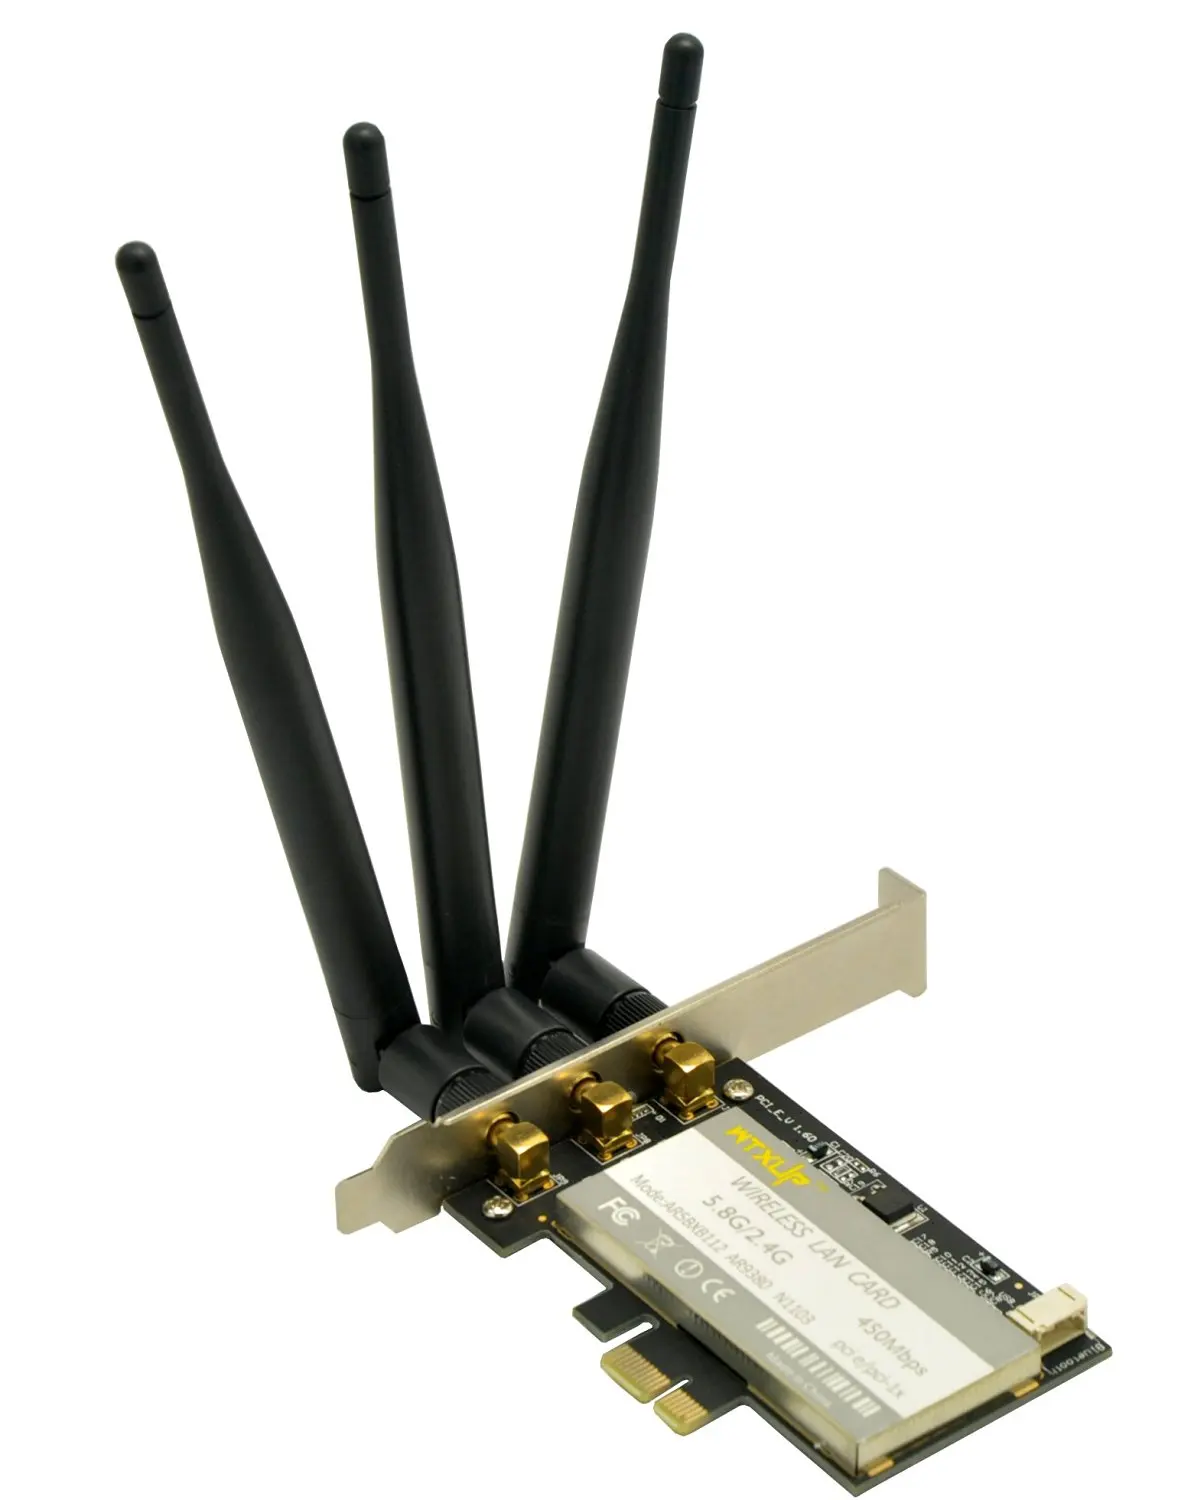 qualcomm qca9565 802.11b/g/n wireless adapter 5ghz